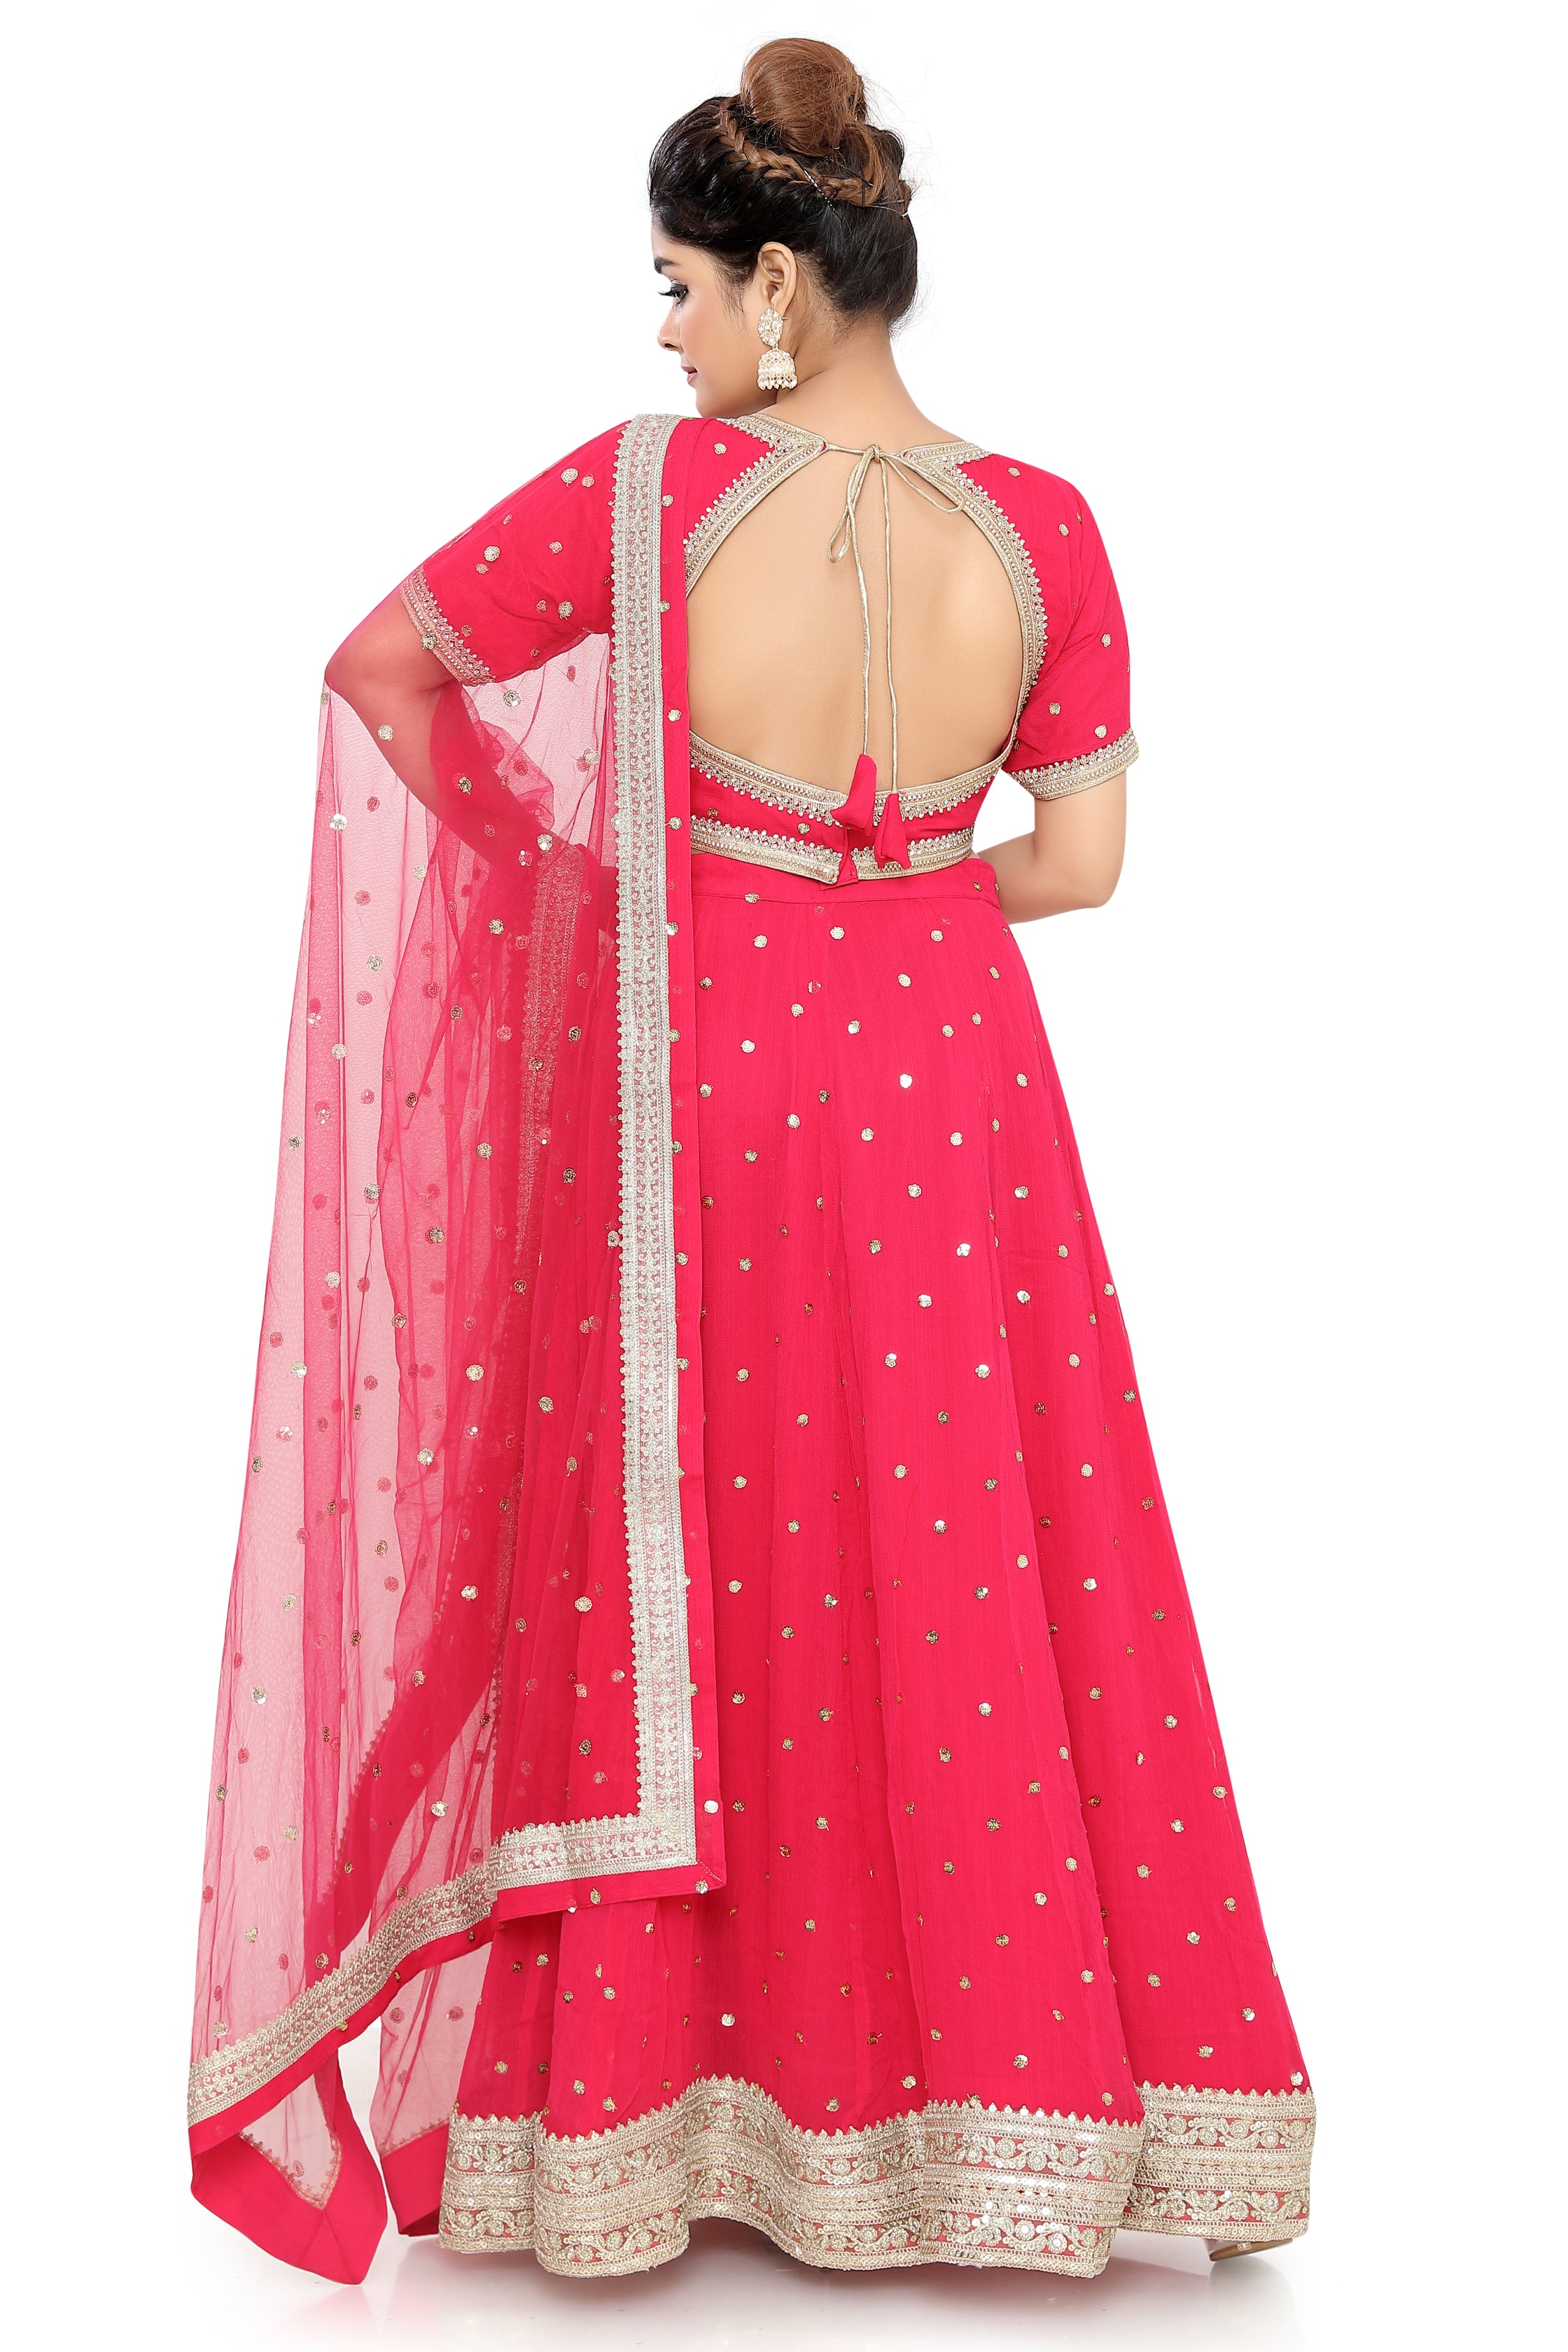 Pink Chiffon Lehenga Choli - Premium Partywear Lehenga from Dulhan Exclusives - Just $250! Shop now at Dulhan Exclusives